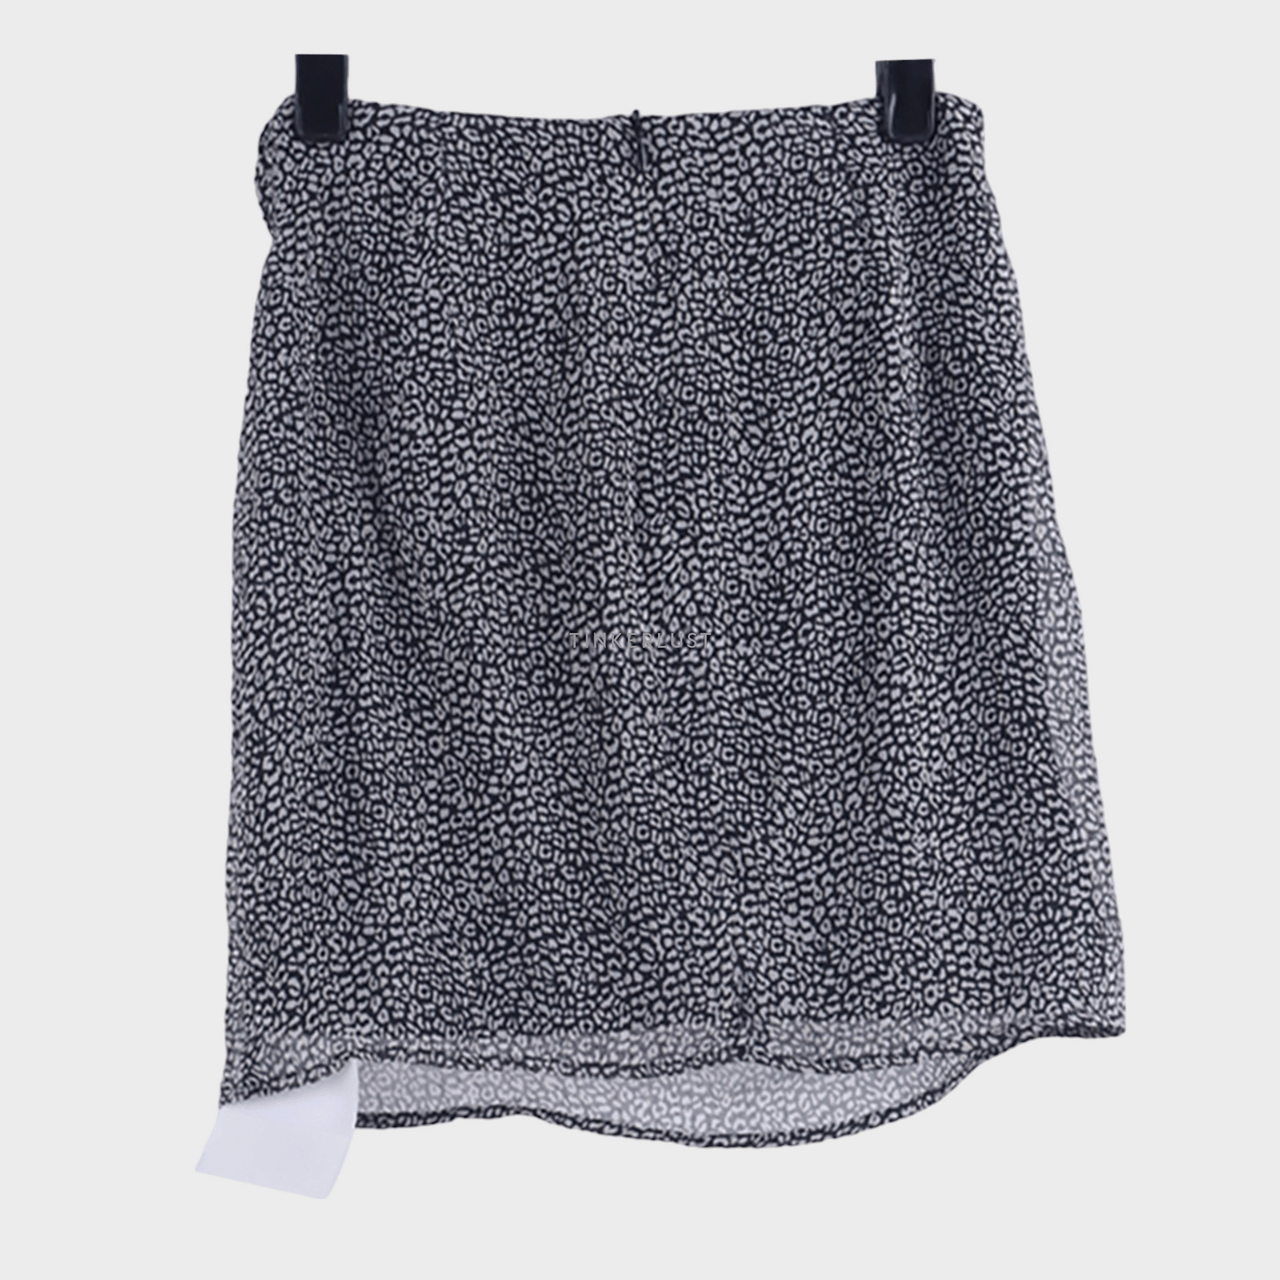 Zara Animal Print High Waist Skirt